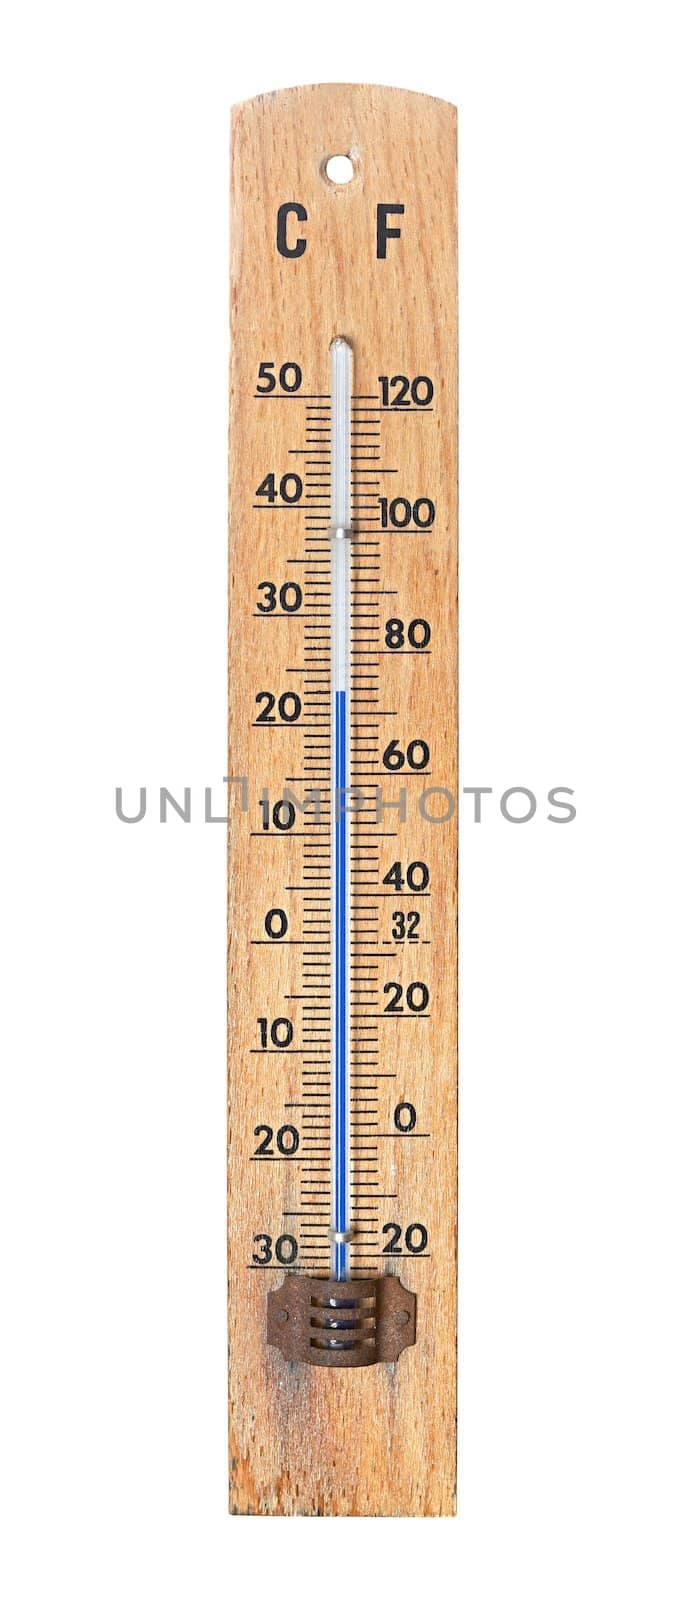 Thermometer by Gudella